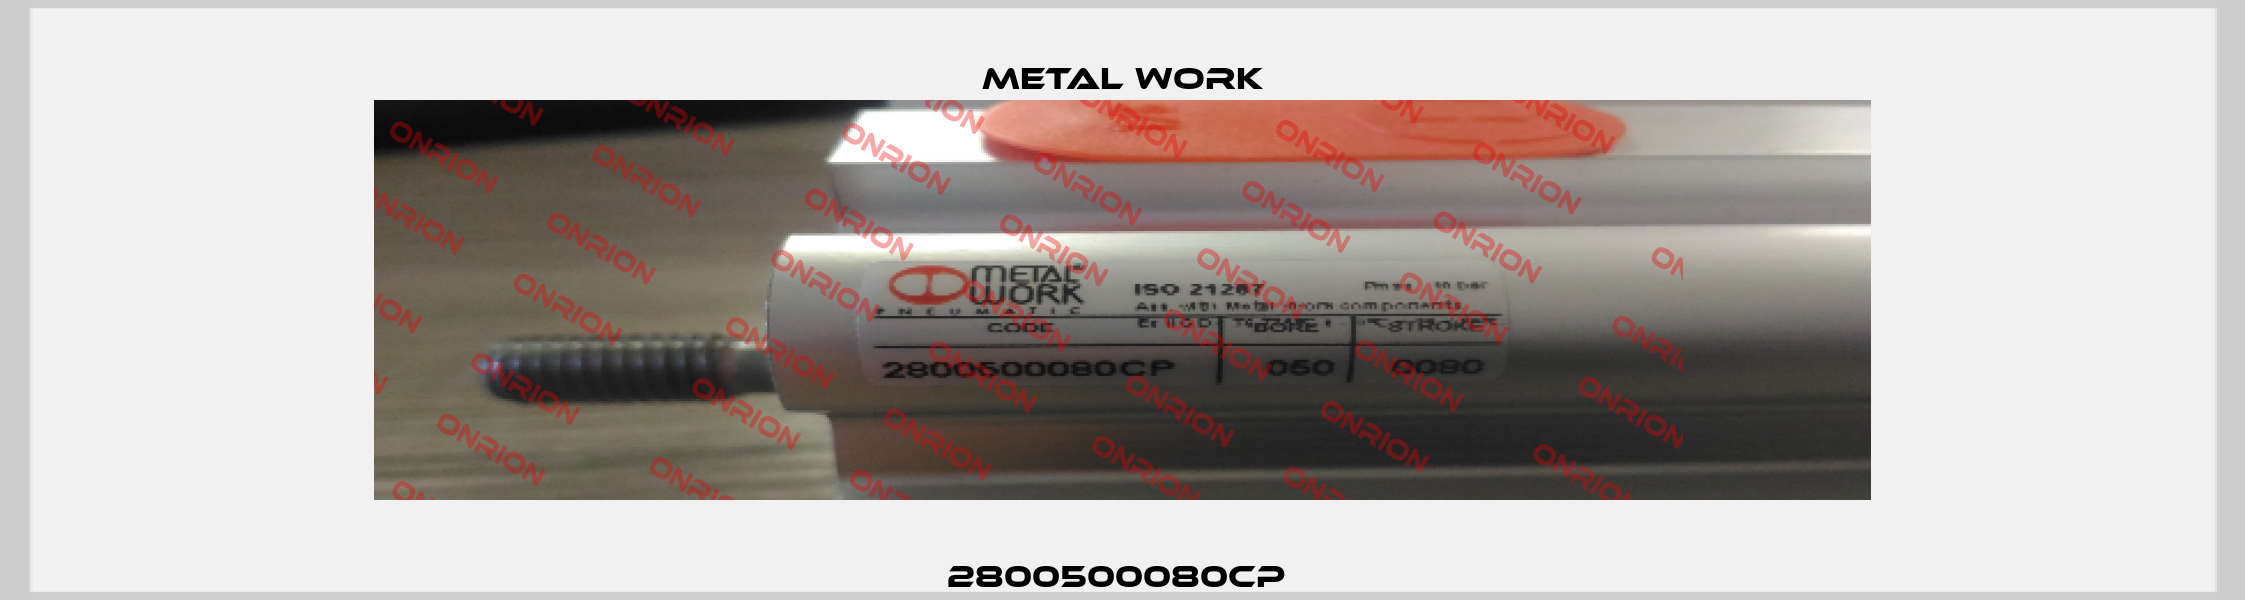 2800500080CP  Metal Work